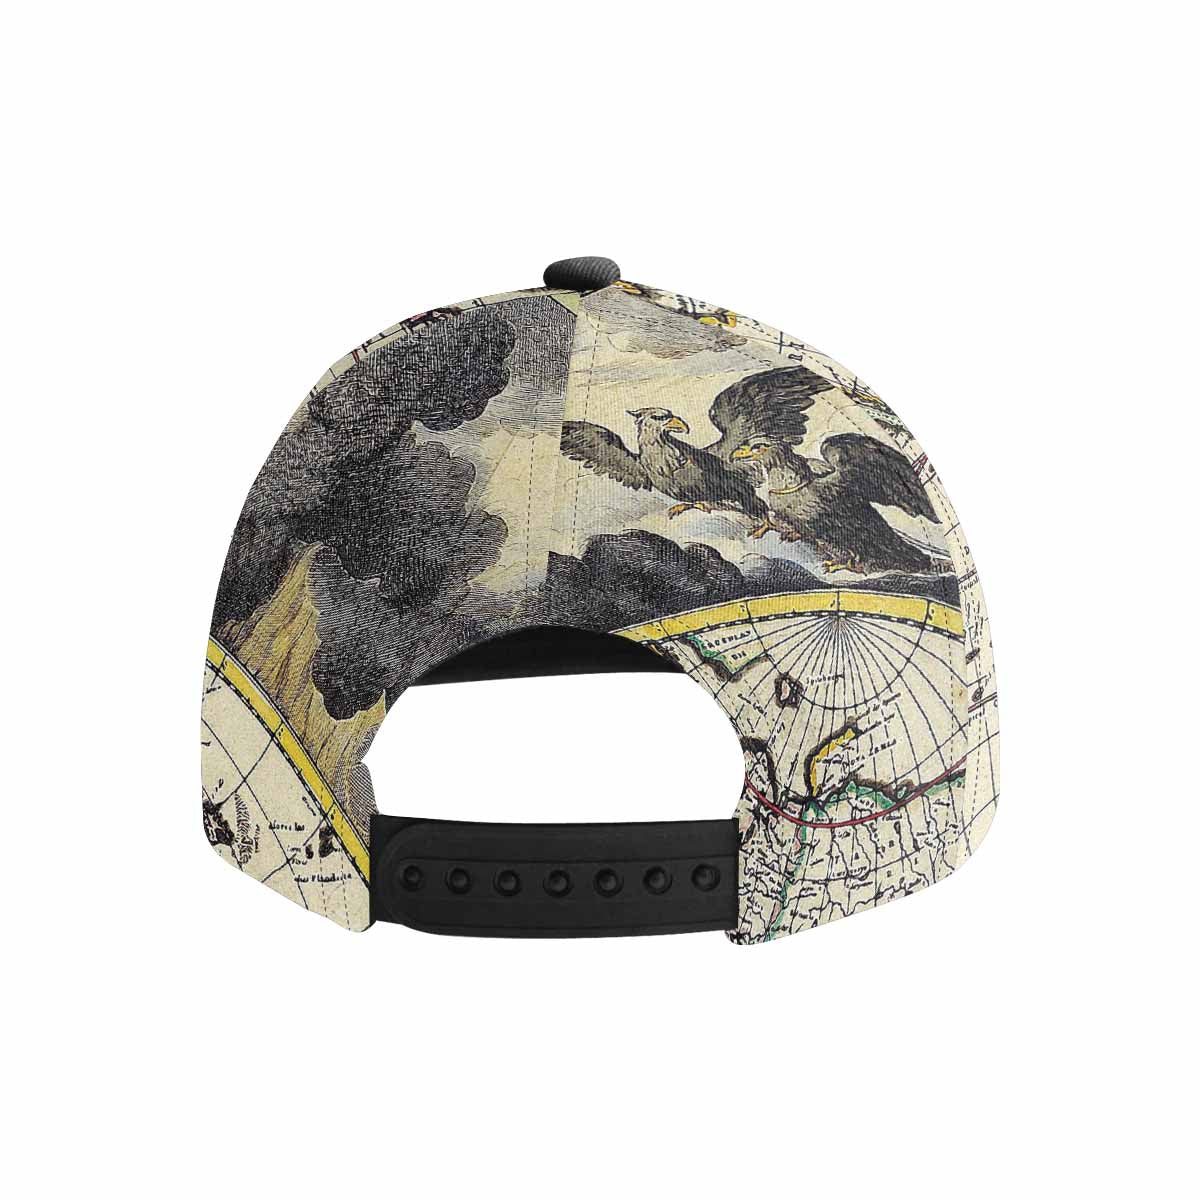 Antique Map design mens or womens deep snapback cap, trucker hat, Design 19